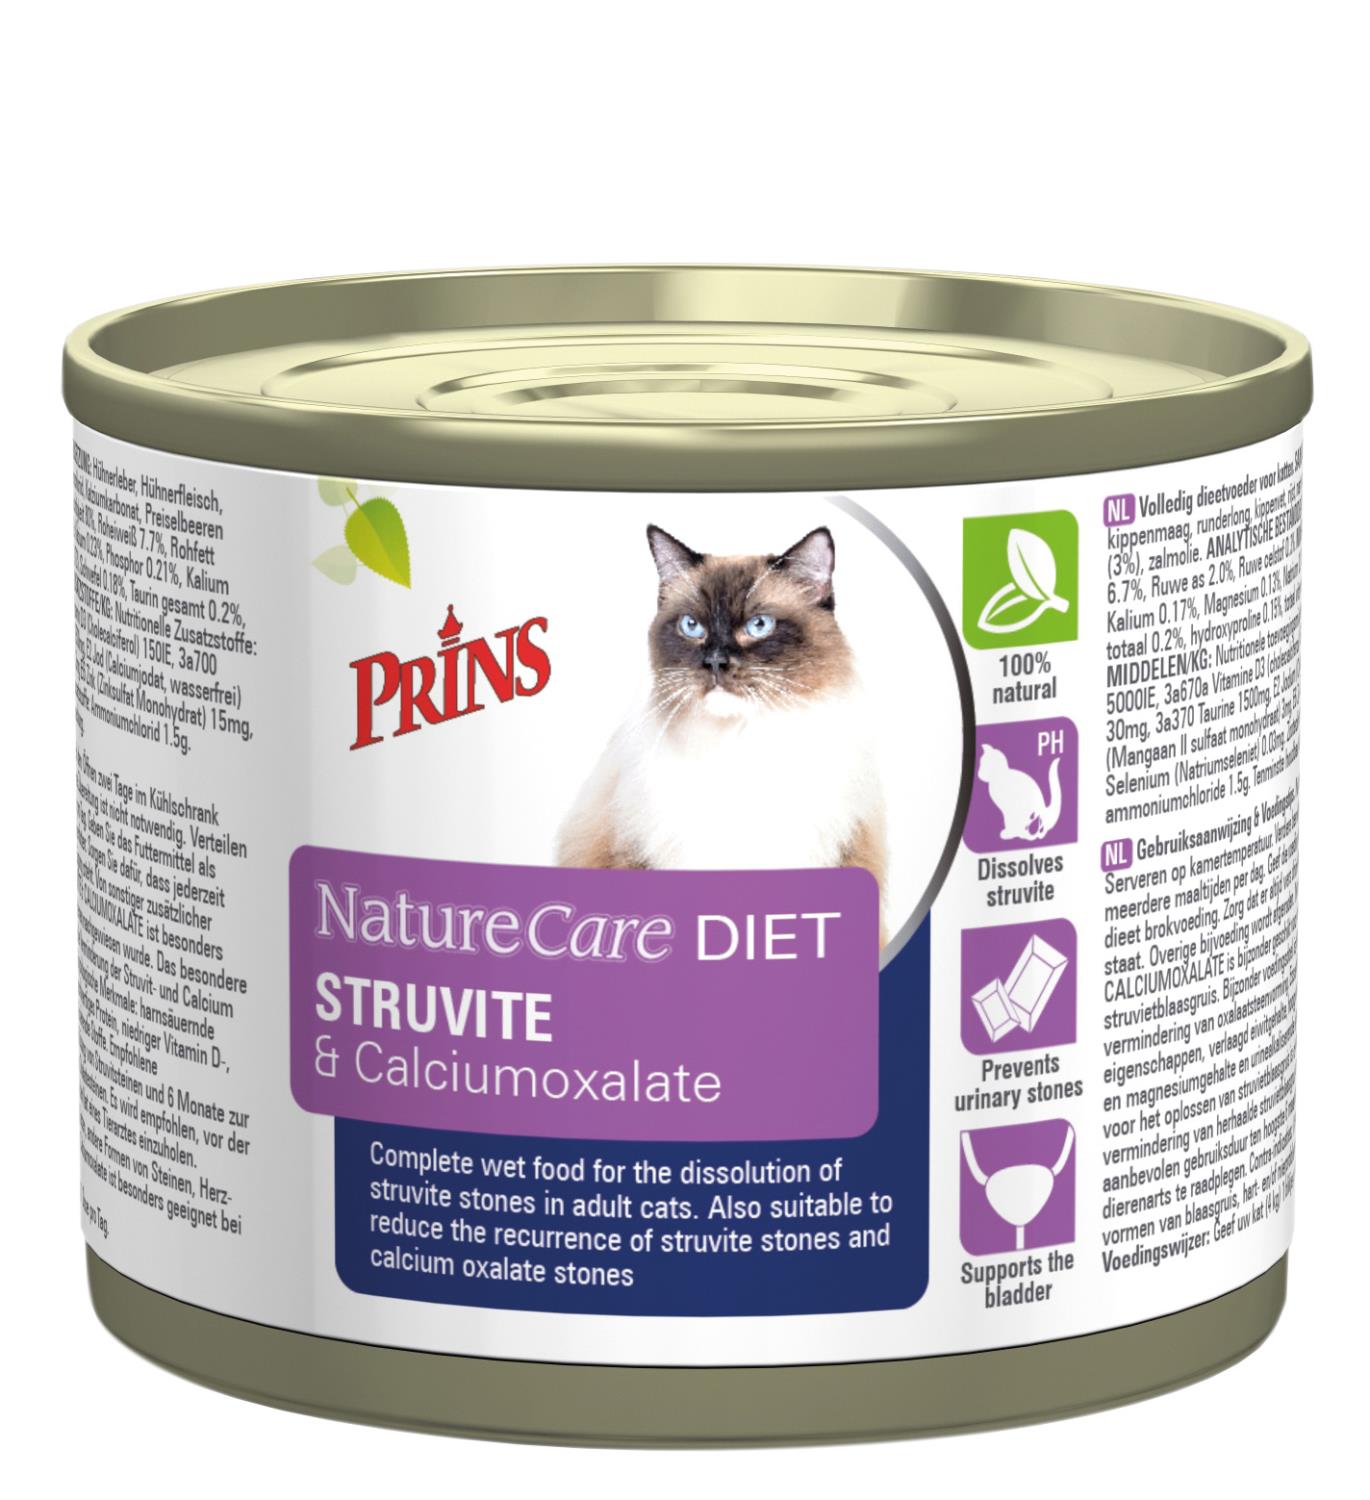 Prins NatureCare Diet Cat wetfood STRUVITE & Calciumoxalate 200g